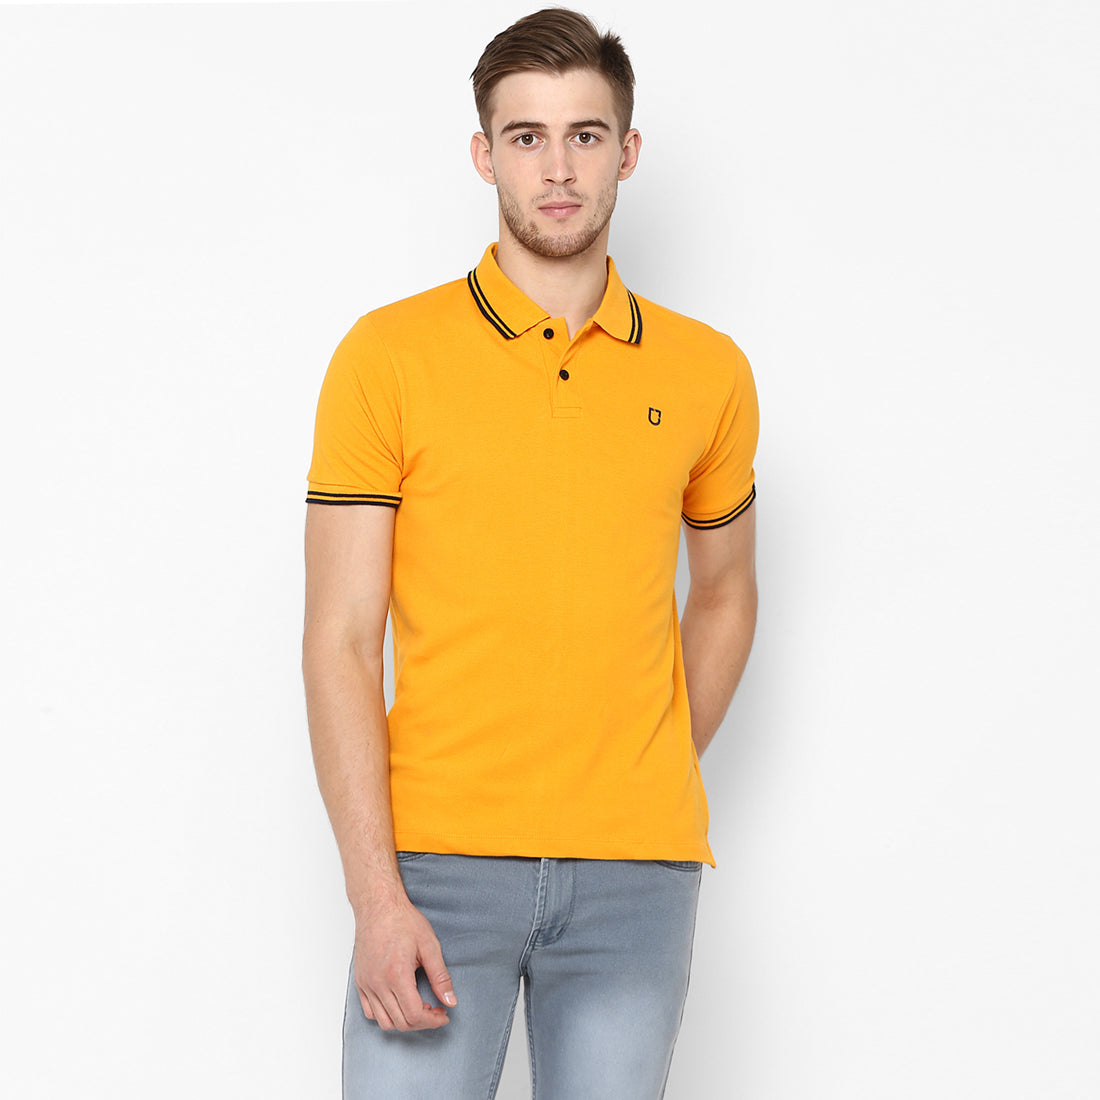 Men's Mustard Solid Mandarin Collar Slim Fit Cotton Polo T-Shirt